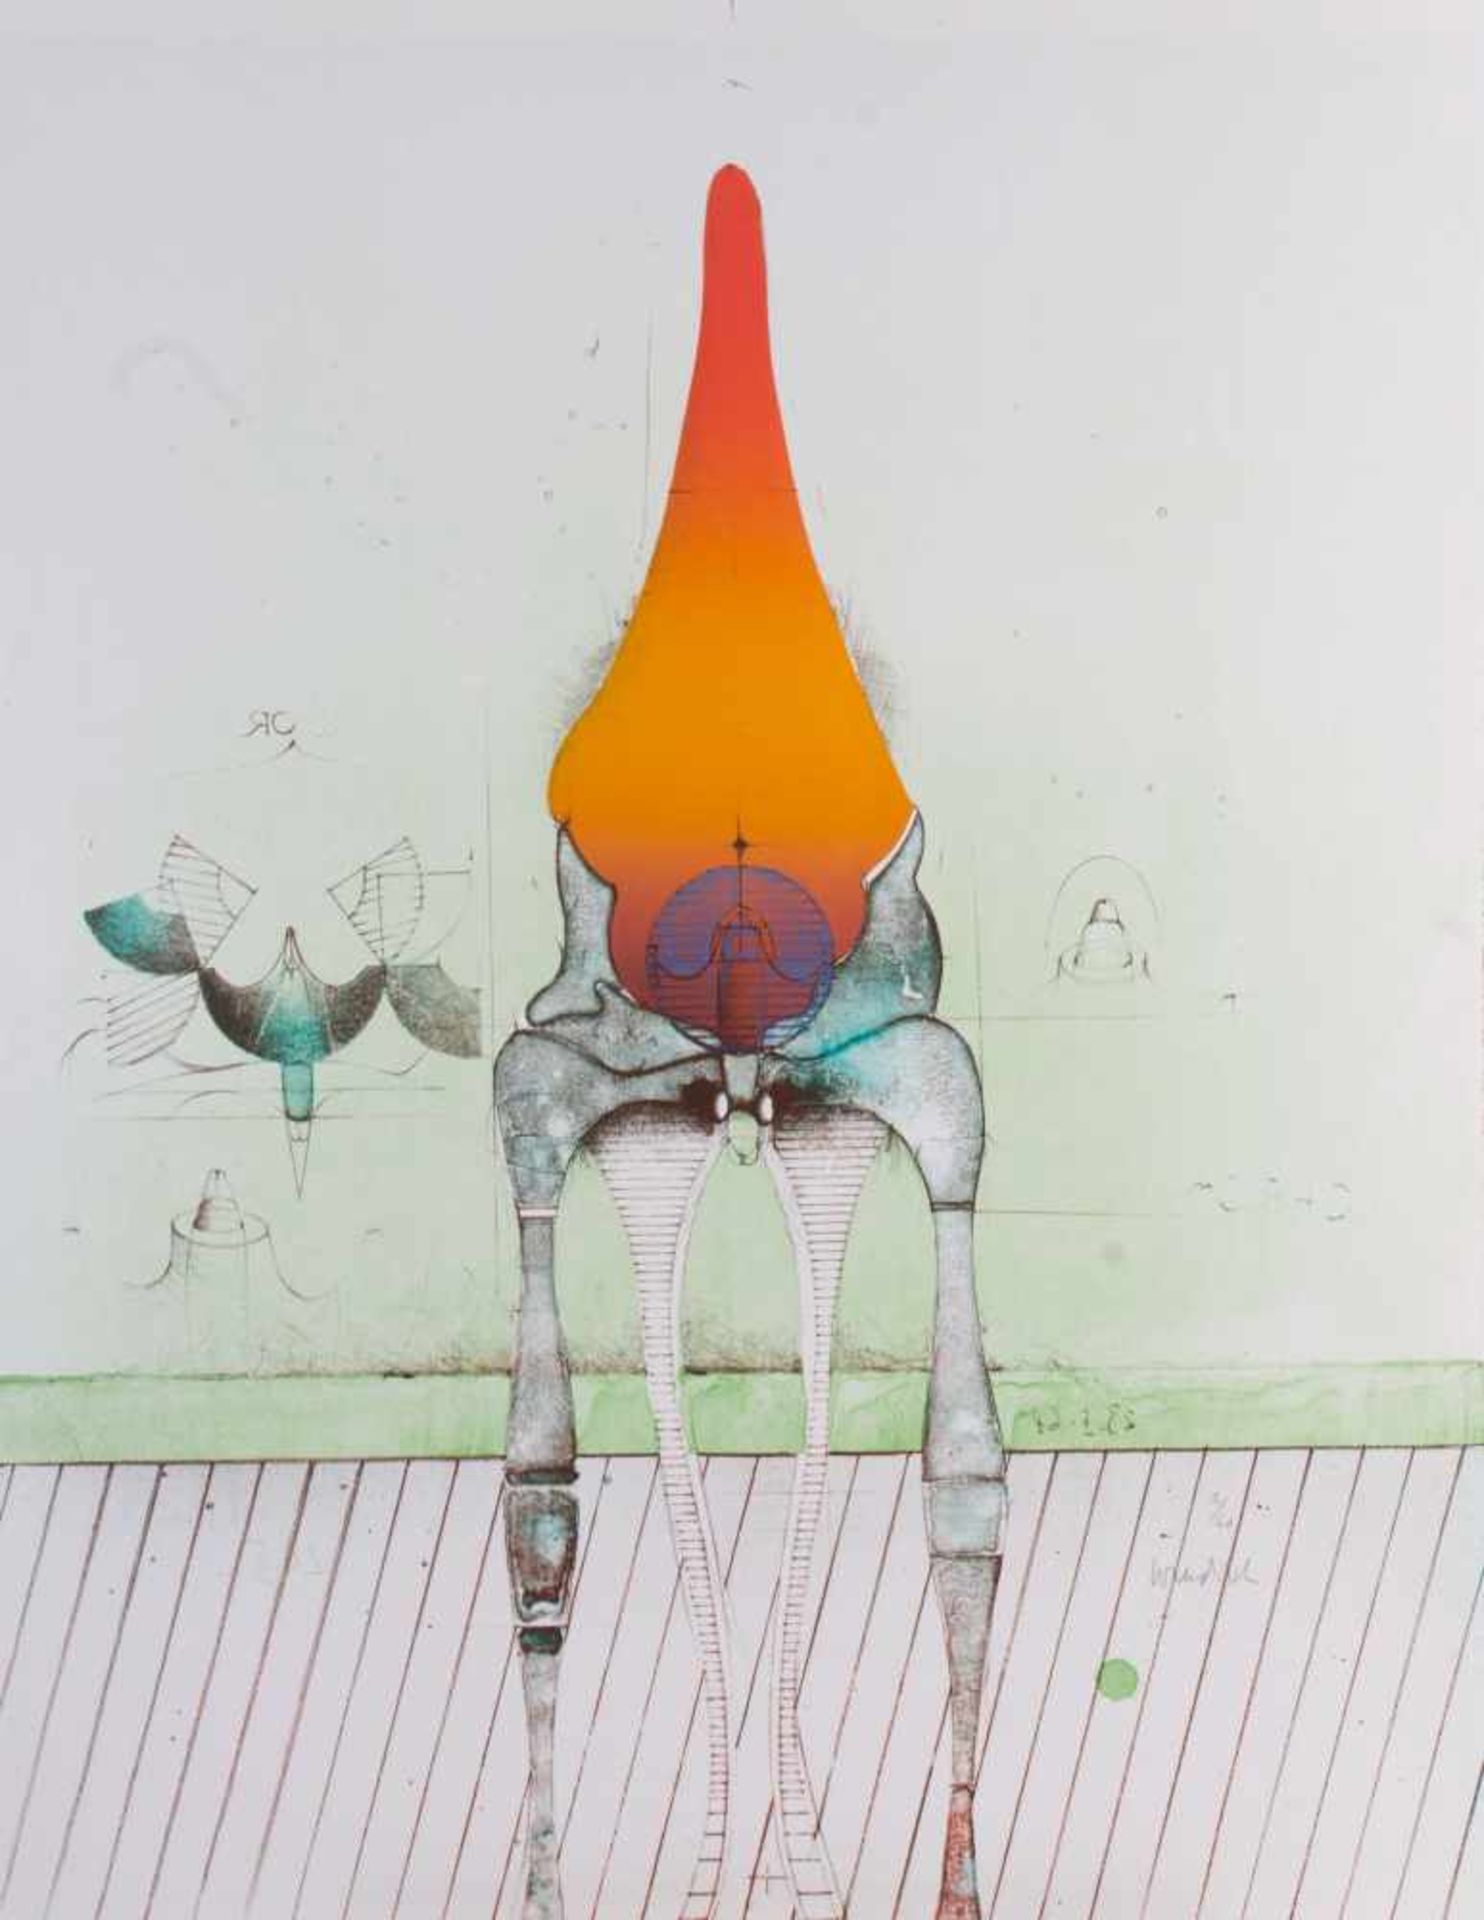 Paul WUNDERLICH (1927-2010) "ohne Titel" Grafik-Farblithografie, 65 cm x 49,8 cm, rechts